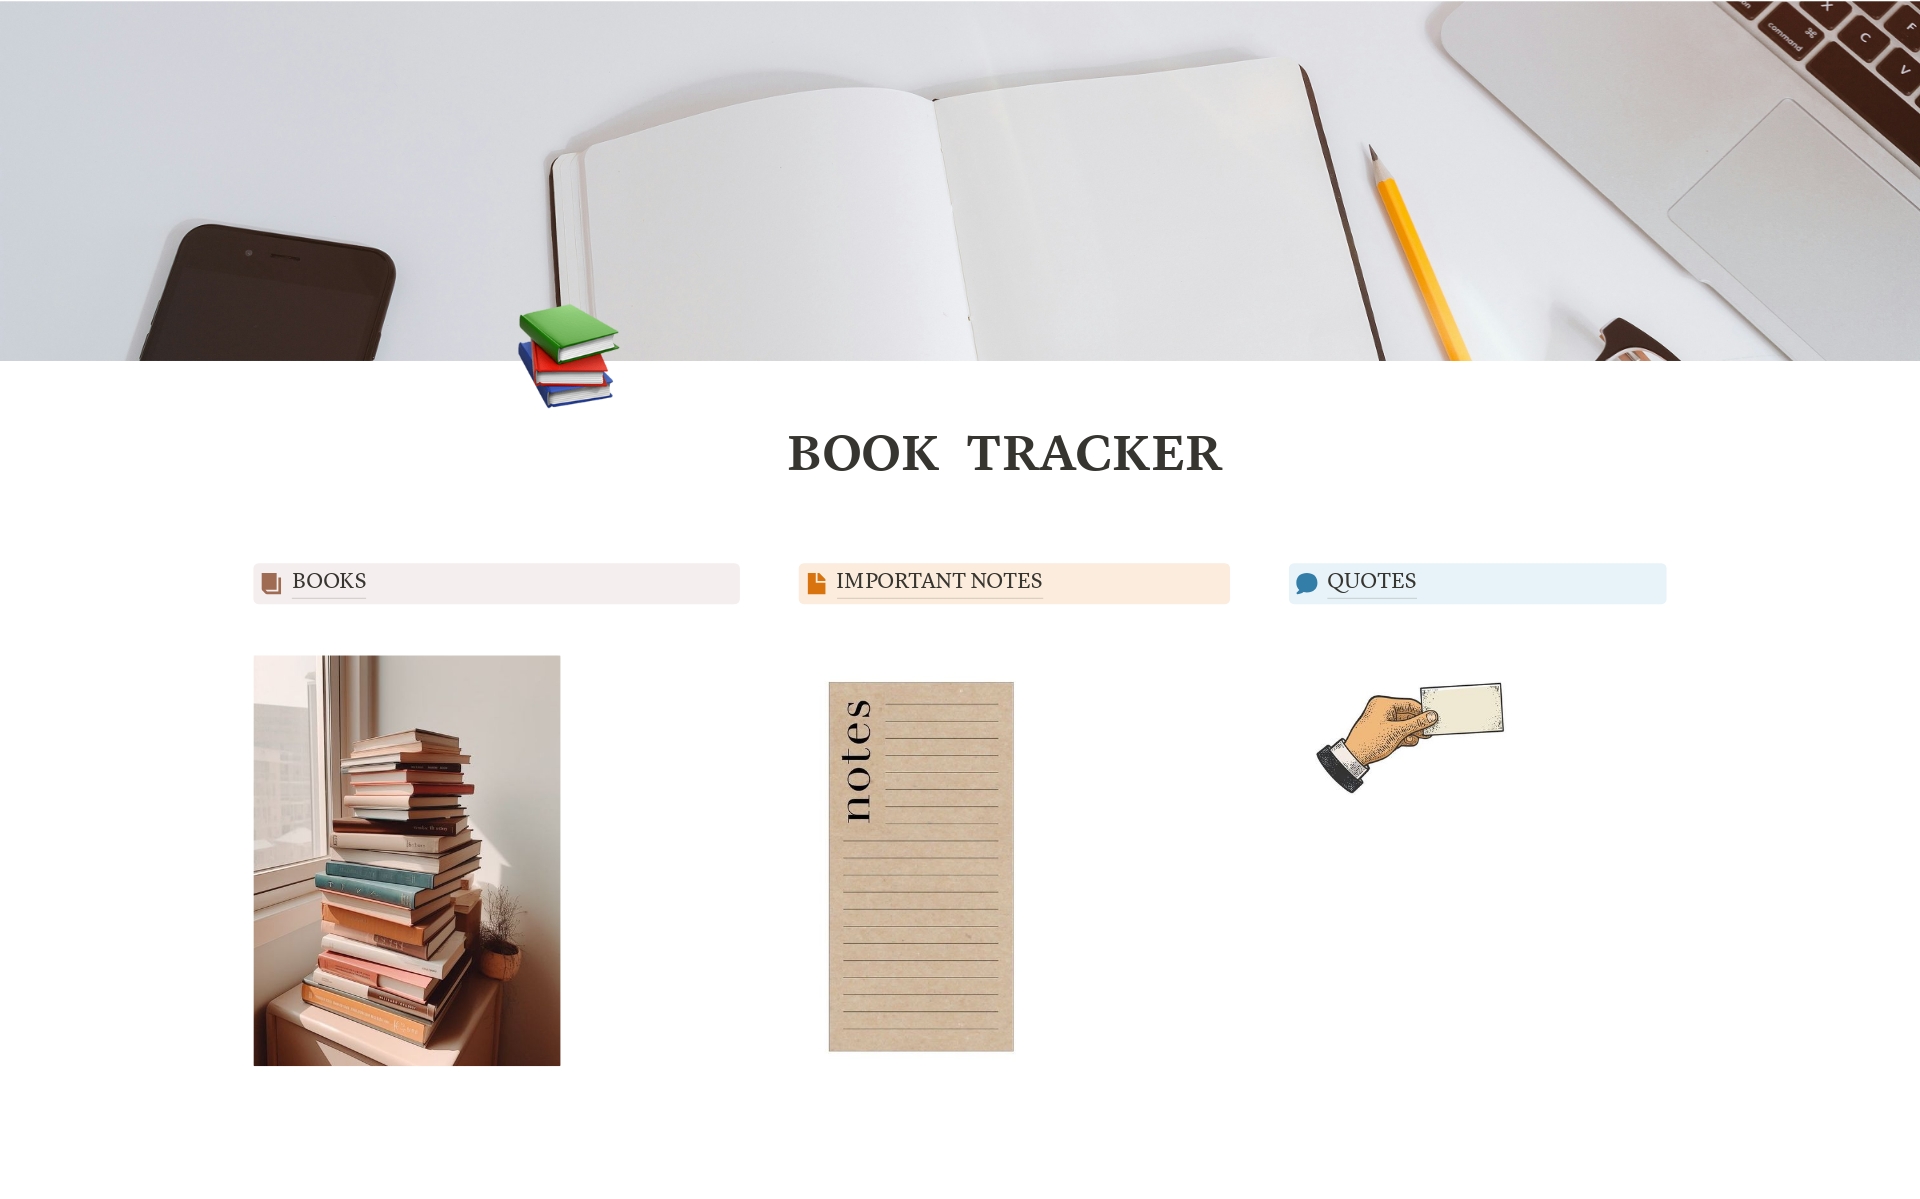 Aperçu du modèle de Book Tracker